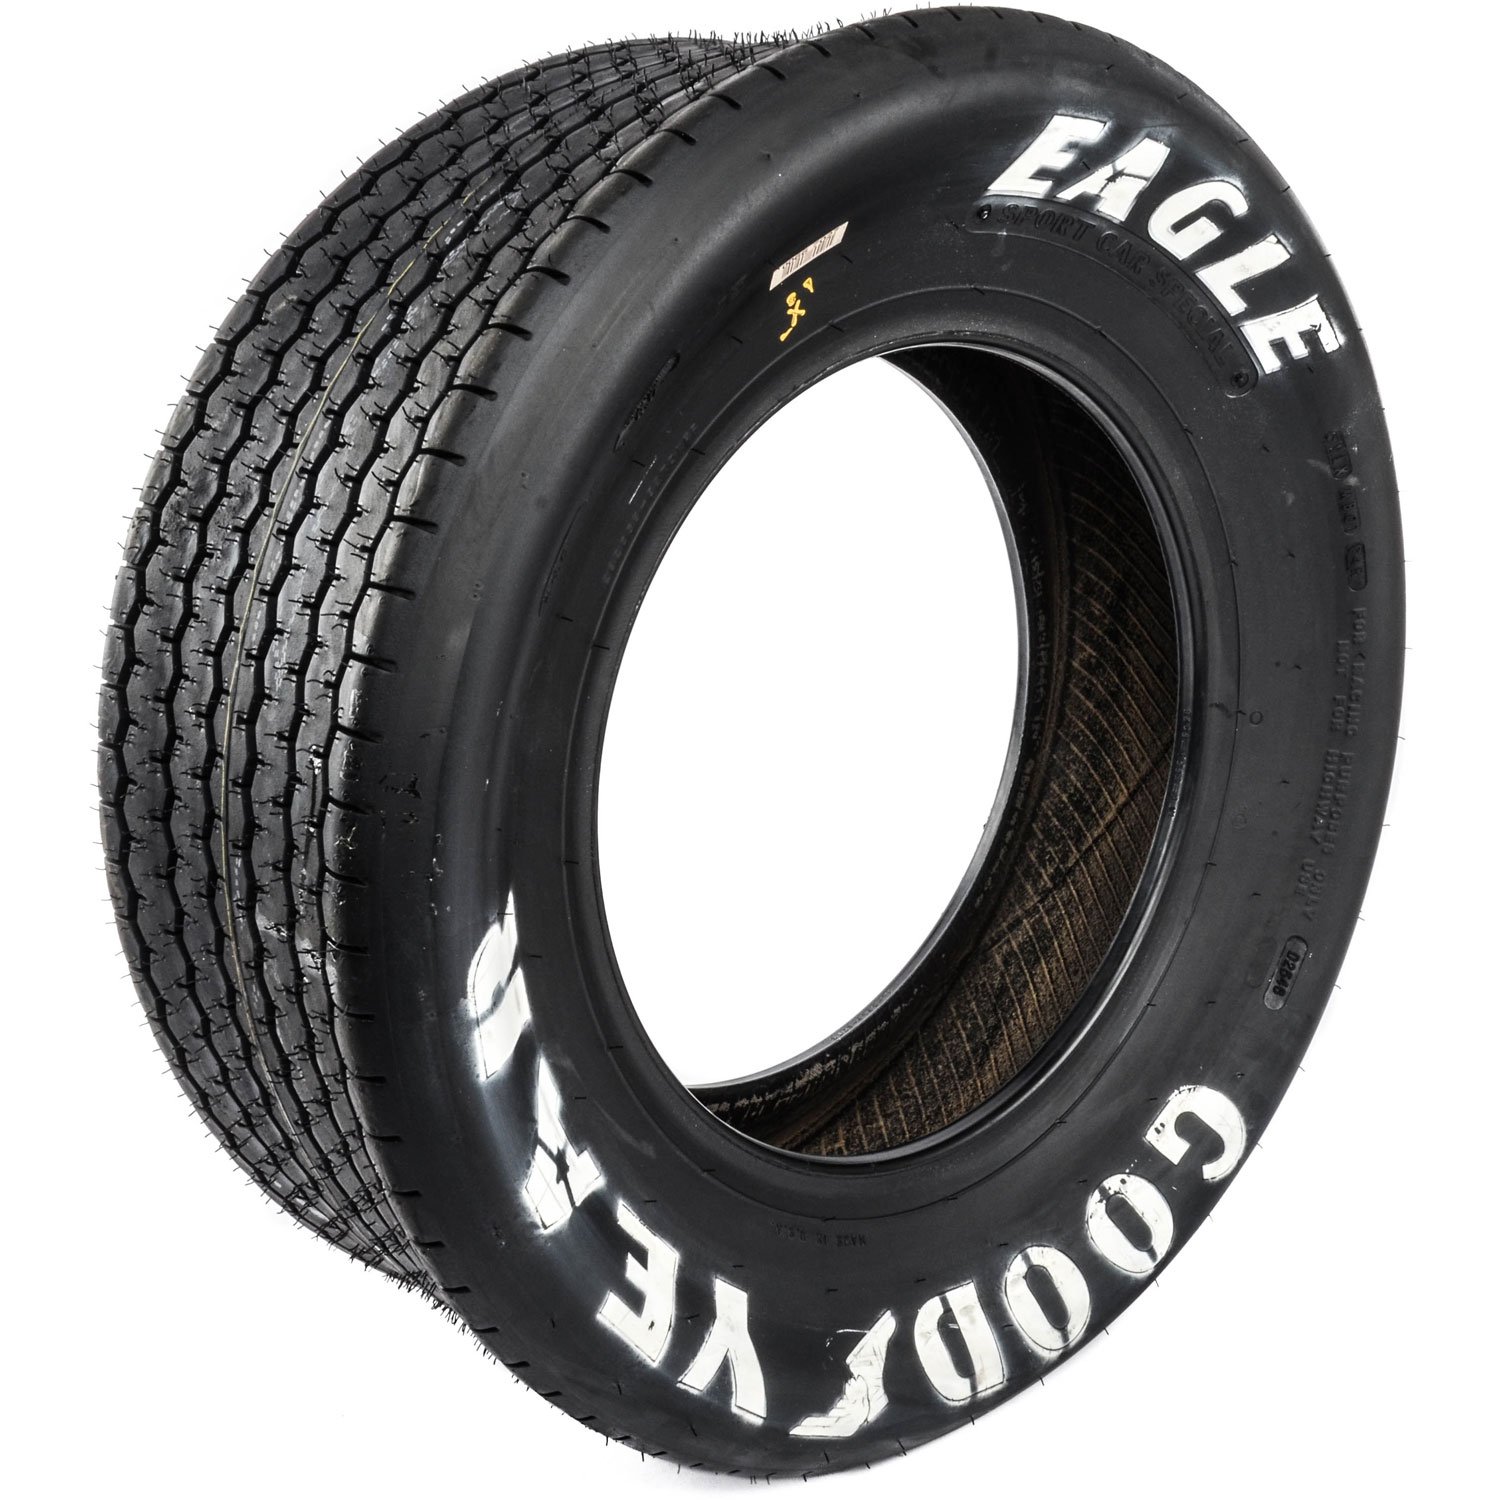 Goodyear bringing retro tyre look to NASCAR - Tyrepress